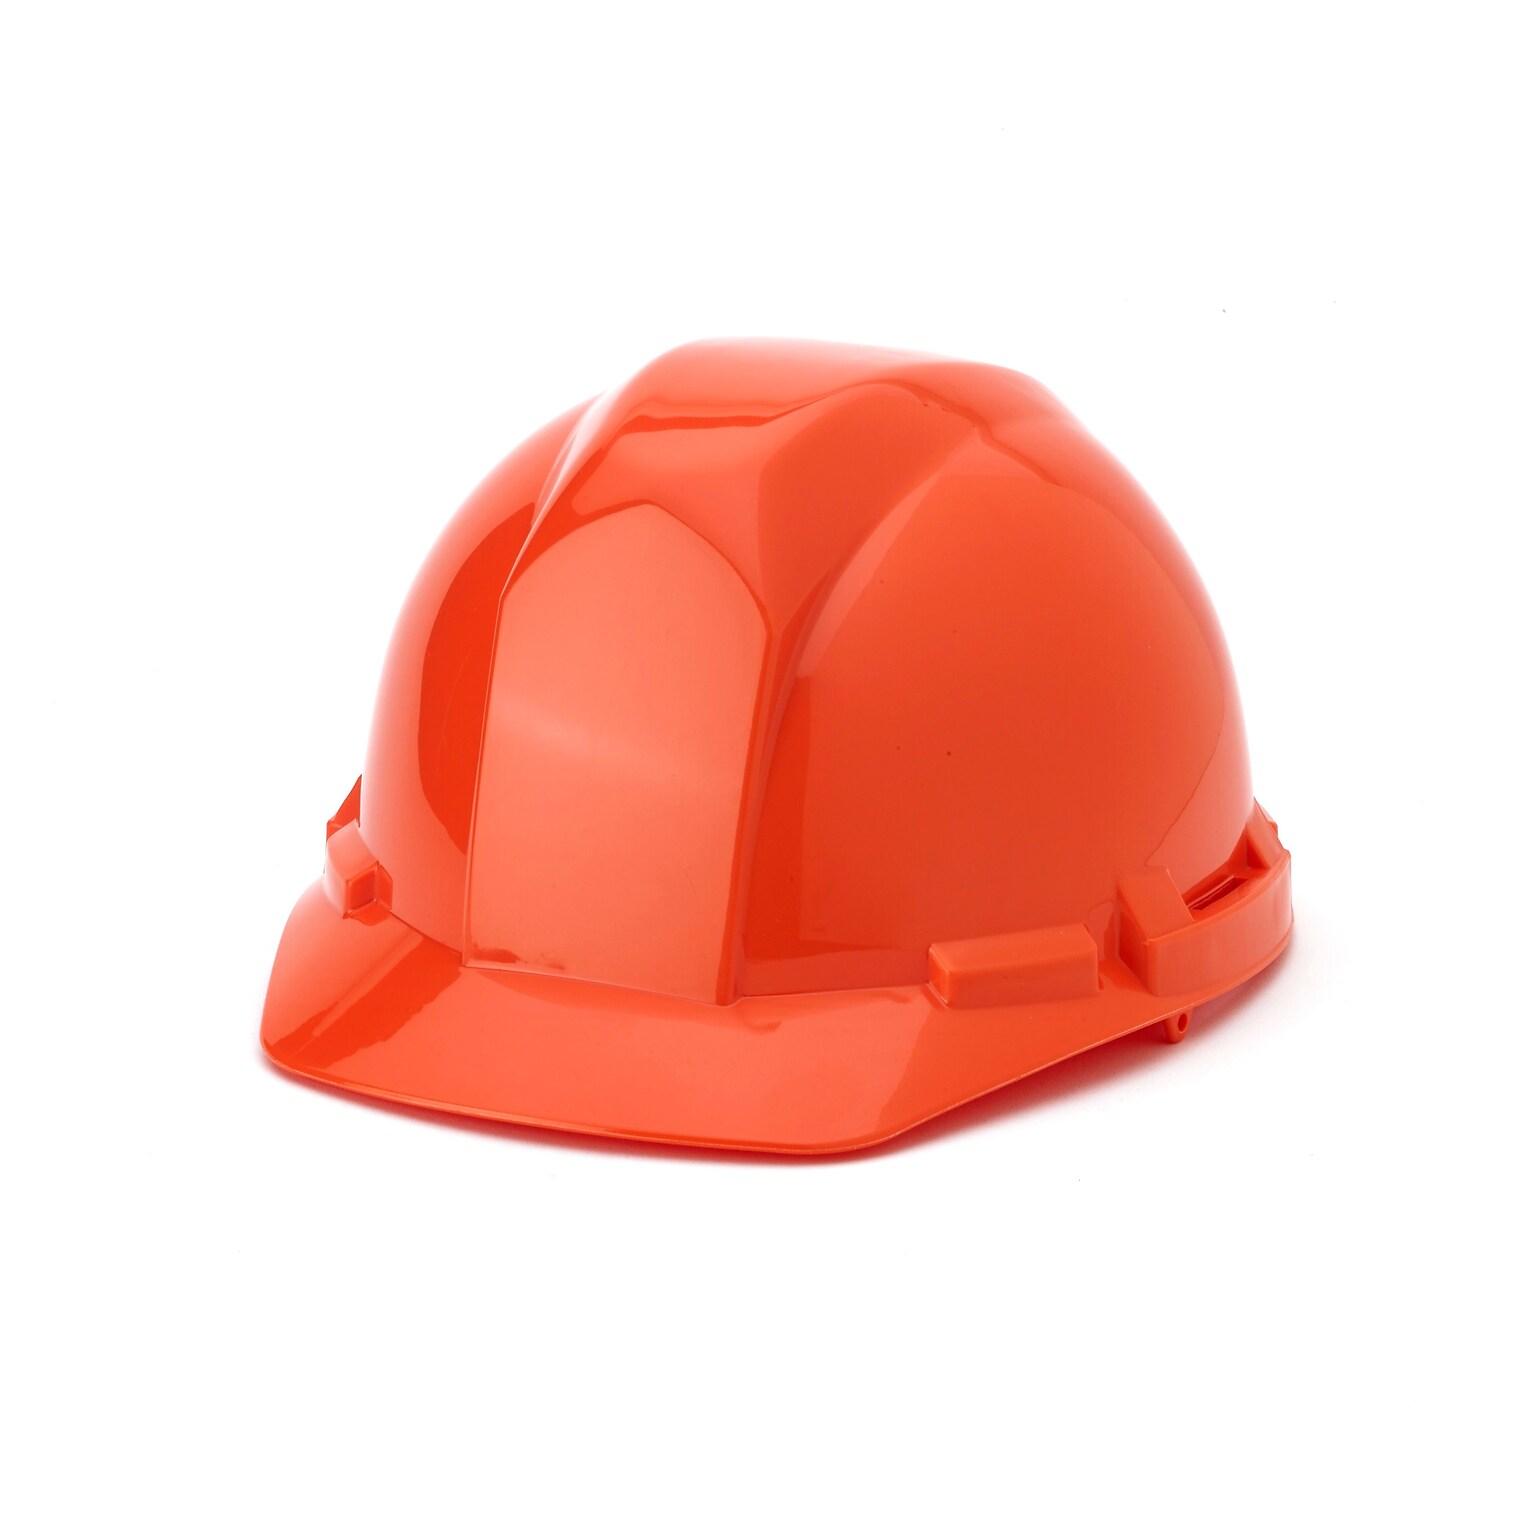 Mutual Industries 4-Point Pinlock Suspension Short Brim Hard Hat, Orange (50100-45)